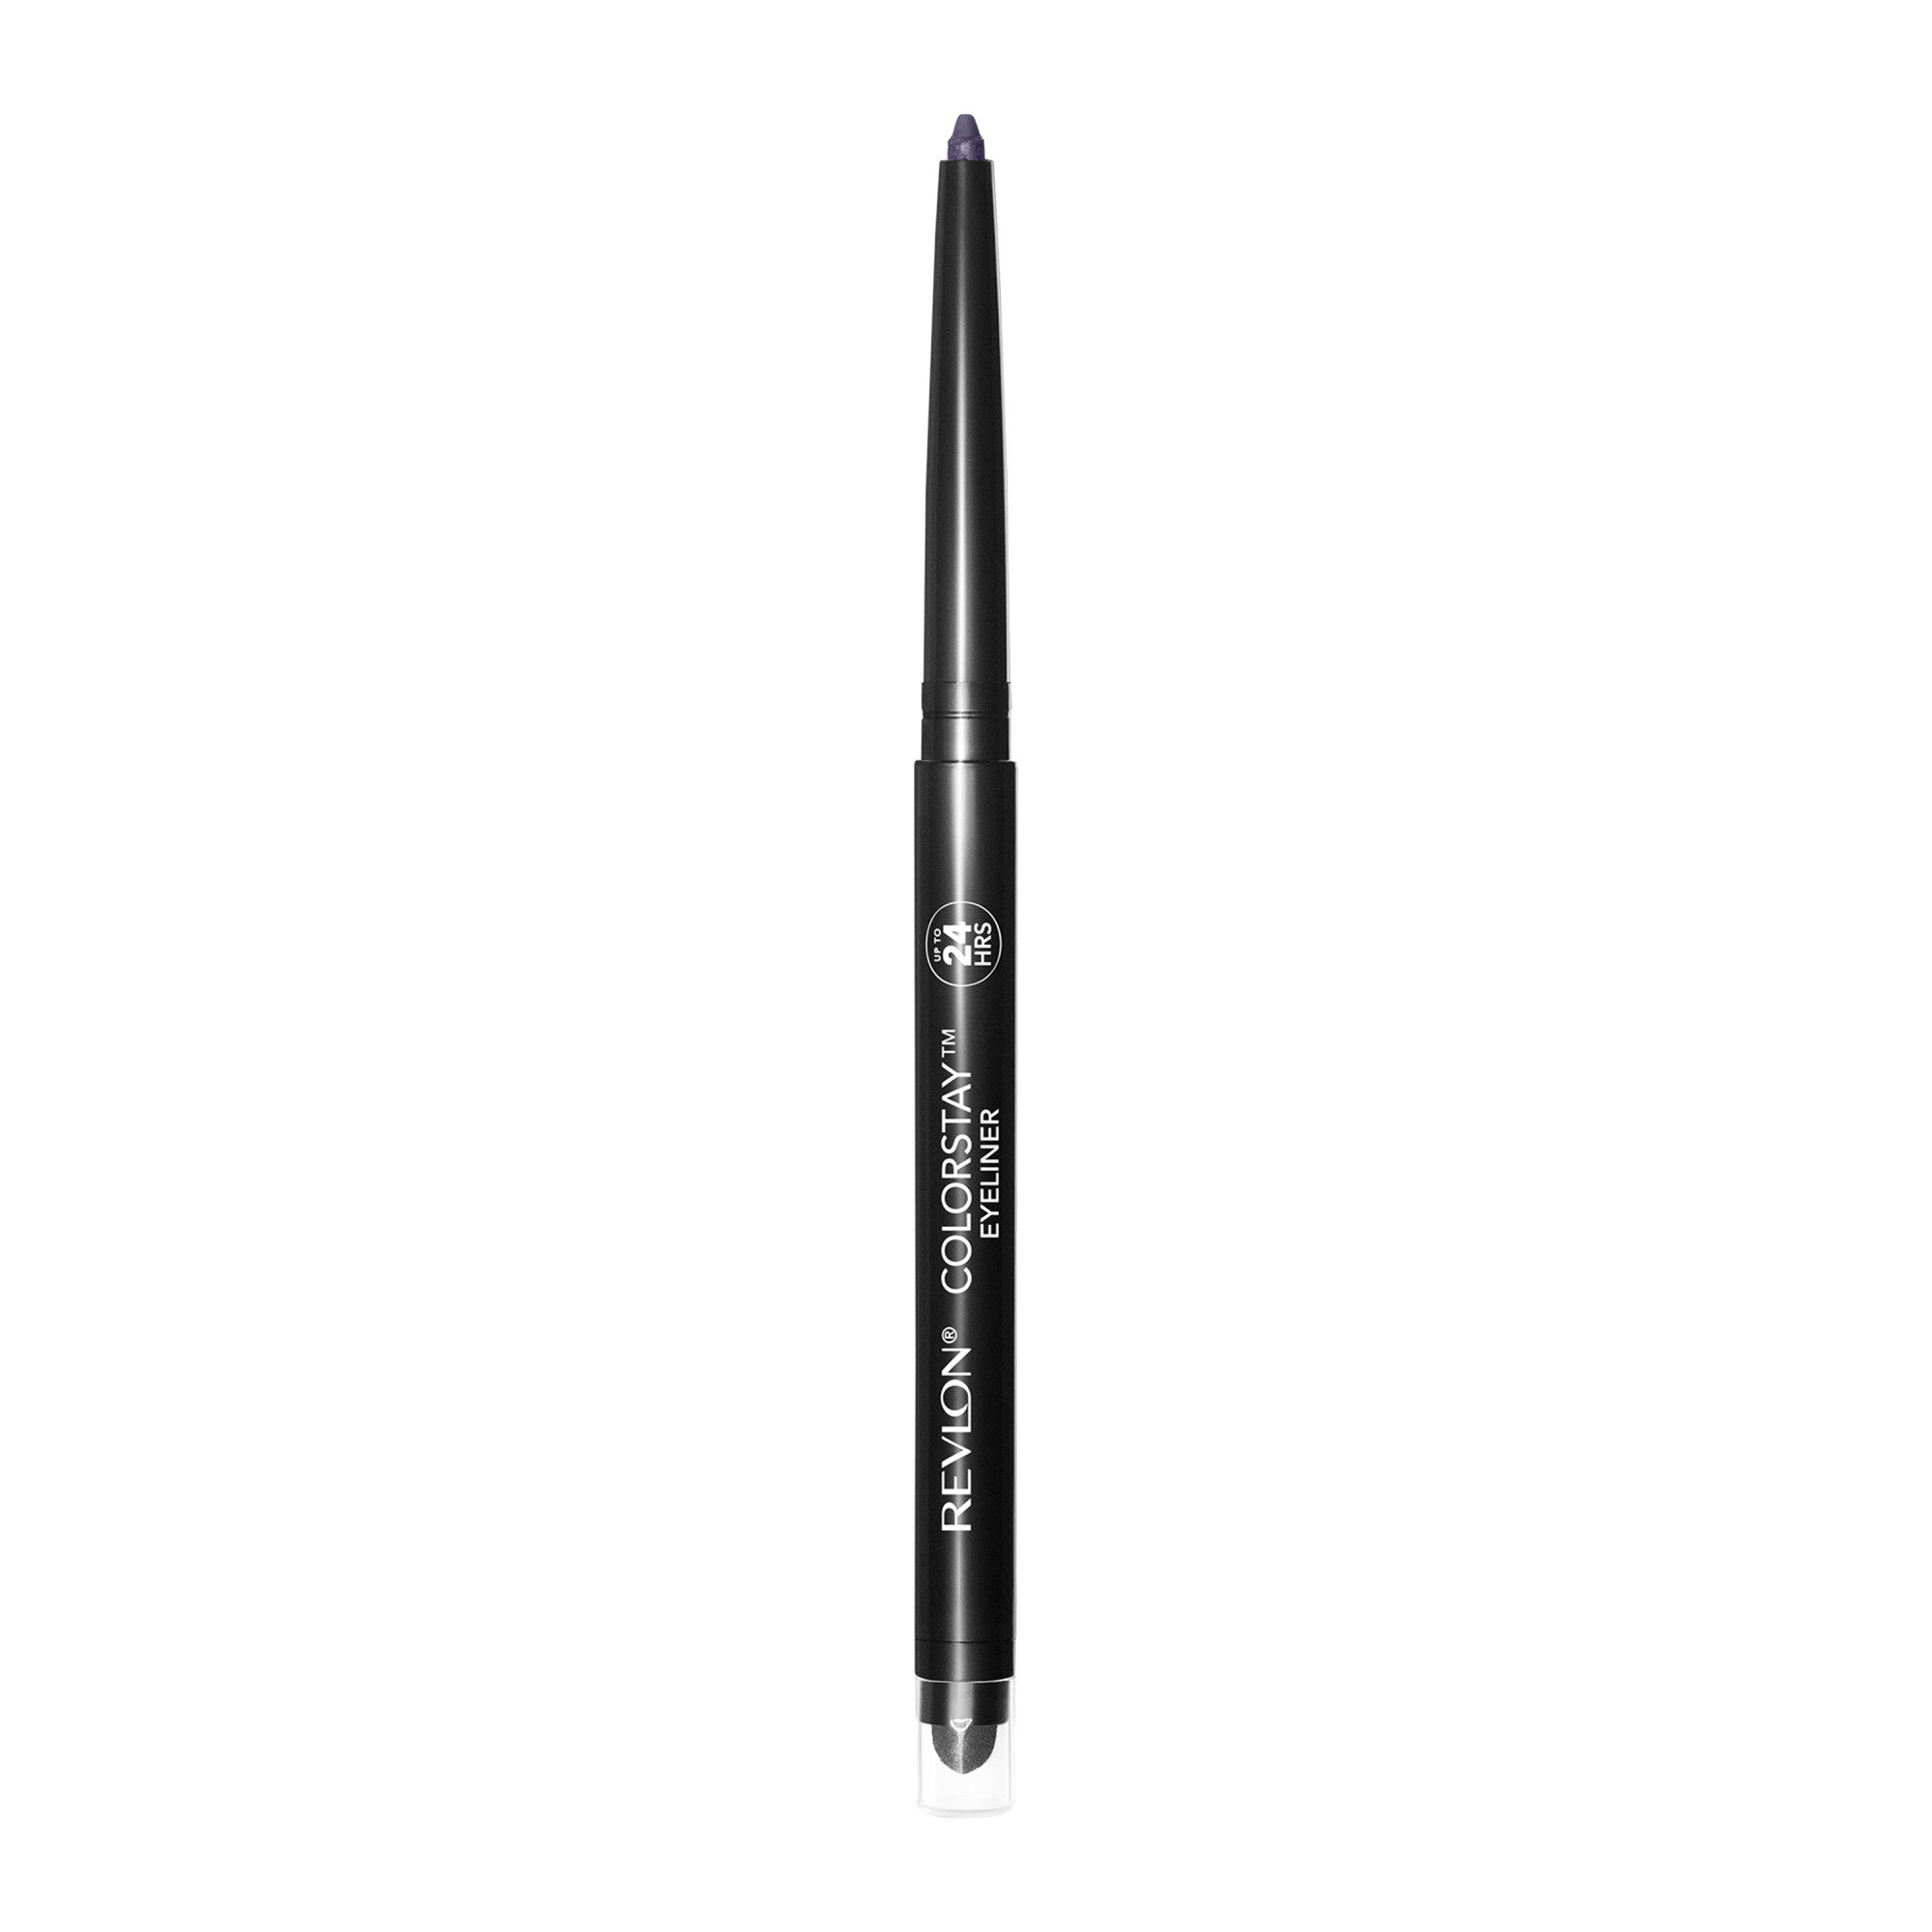 Revlon ColorStay Waterproof Eyeliner Pencil, 24HR Wear, Built-in Sharpener, 209 Black Violet, 0.01 oz - image 3 of 10